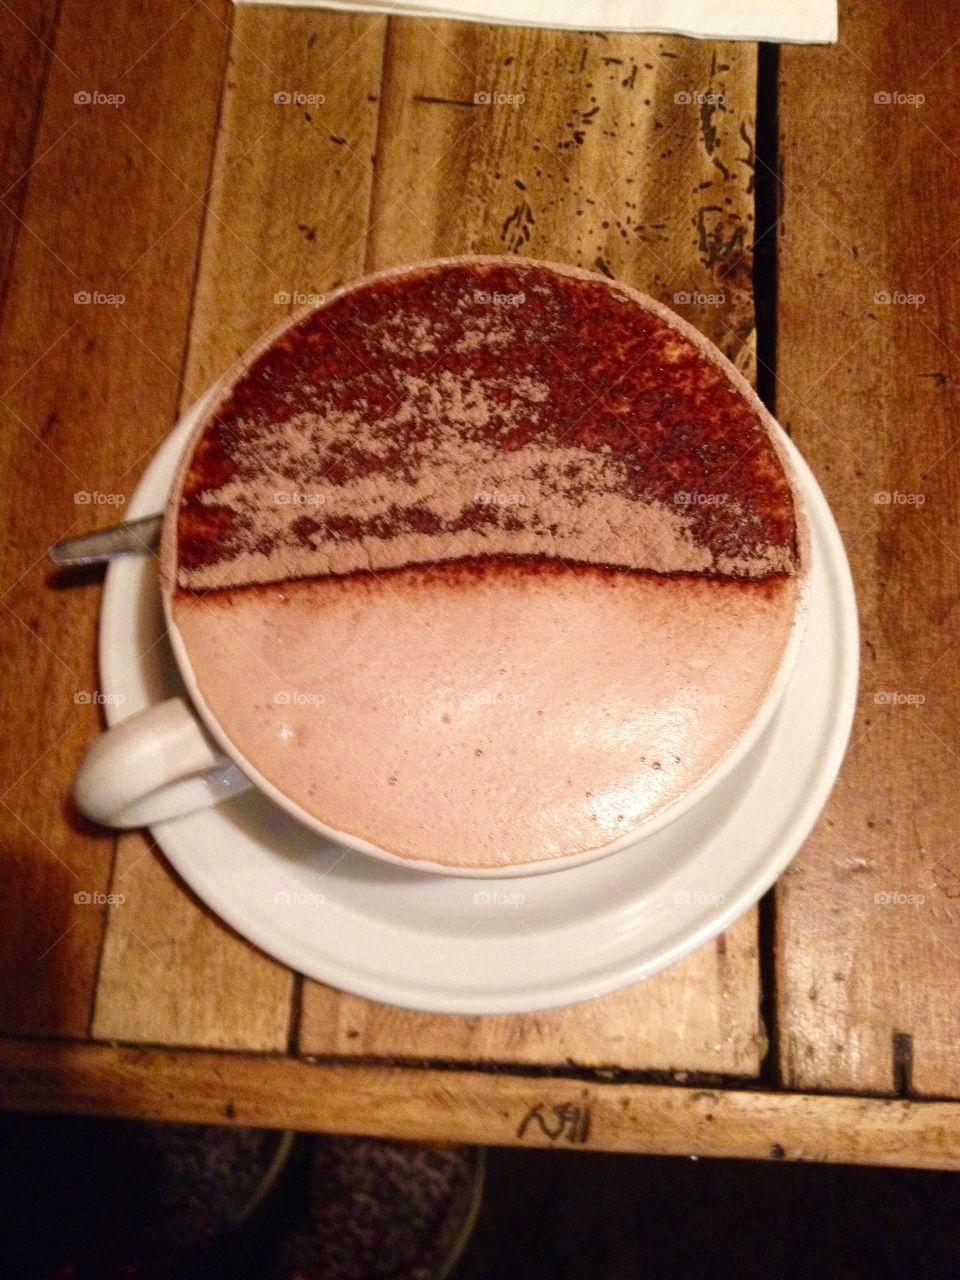 Getting warm. Hot chocolate